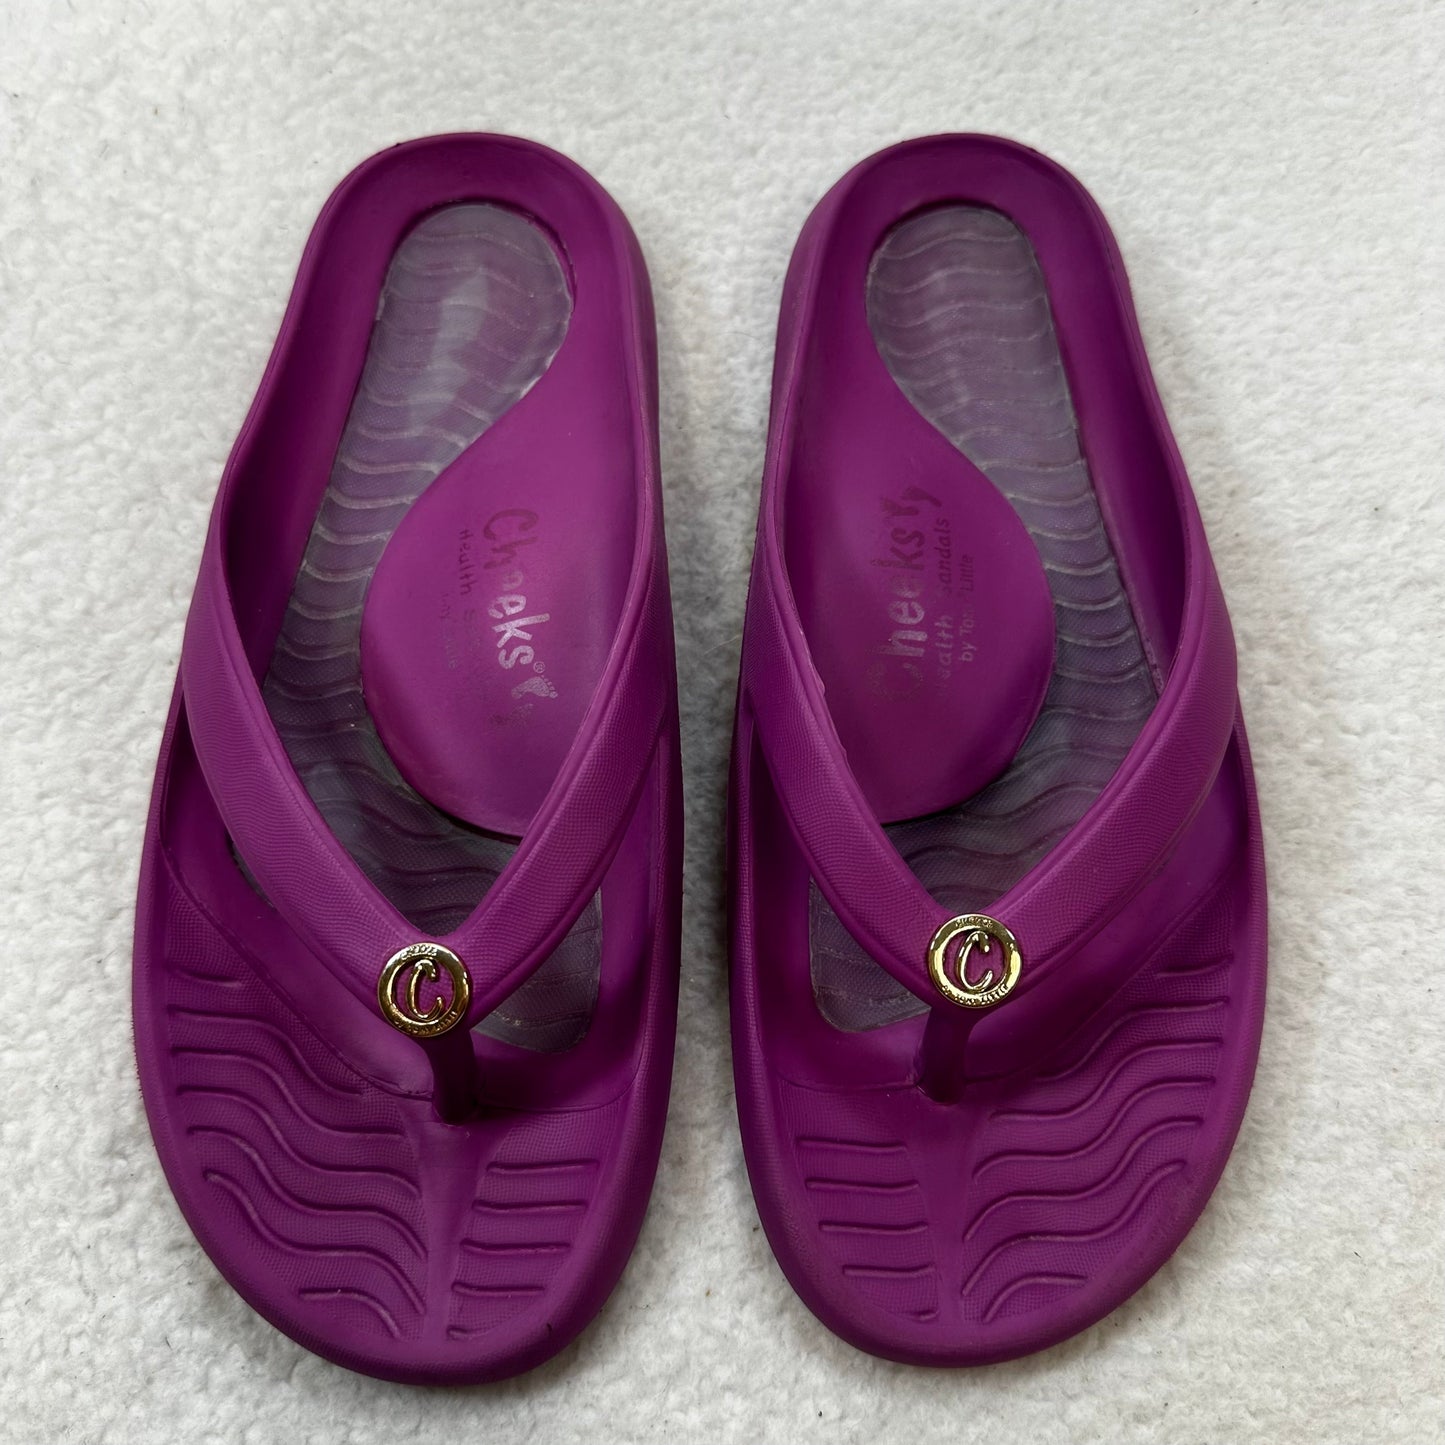 Fuschia Sandals Flip Flops Clothes Mentor, Size 8